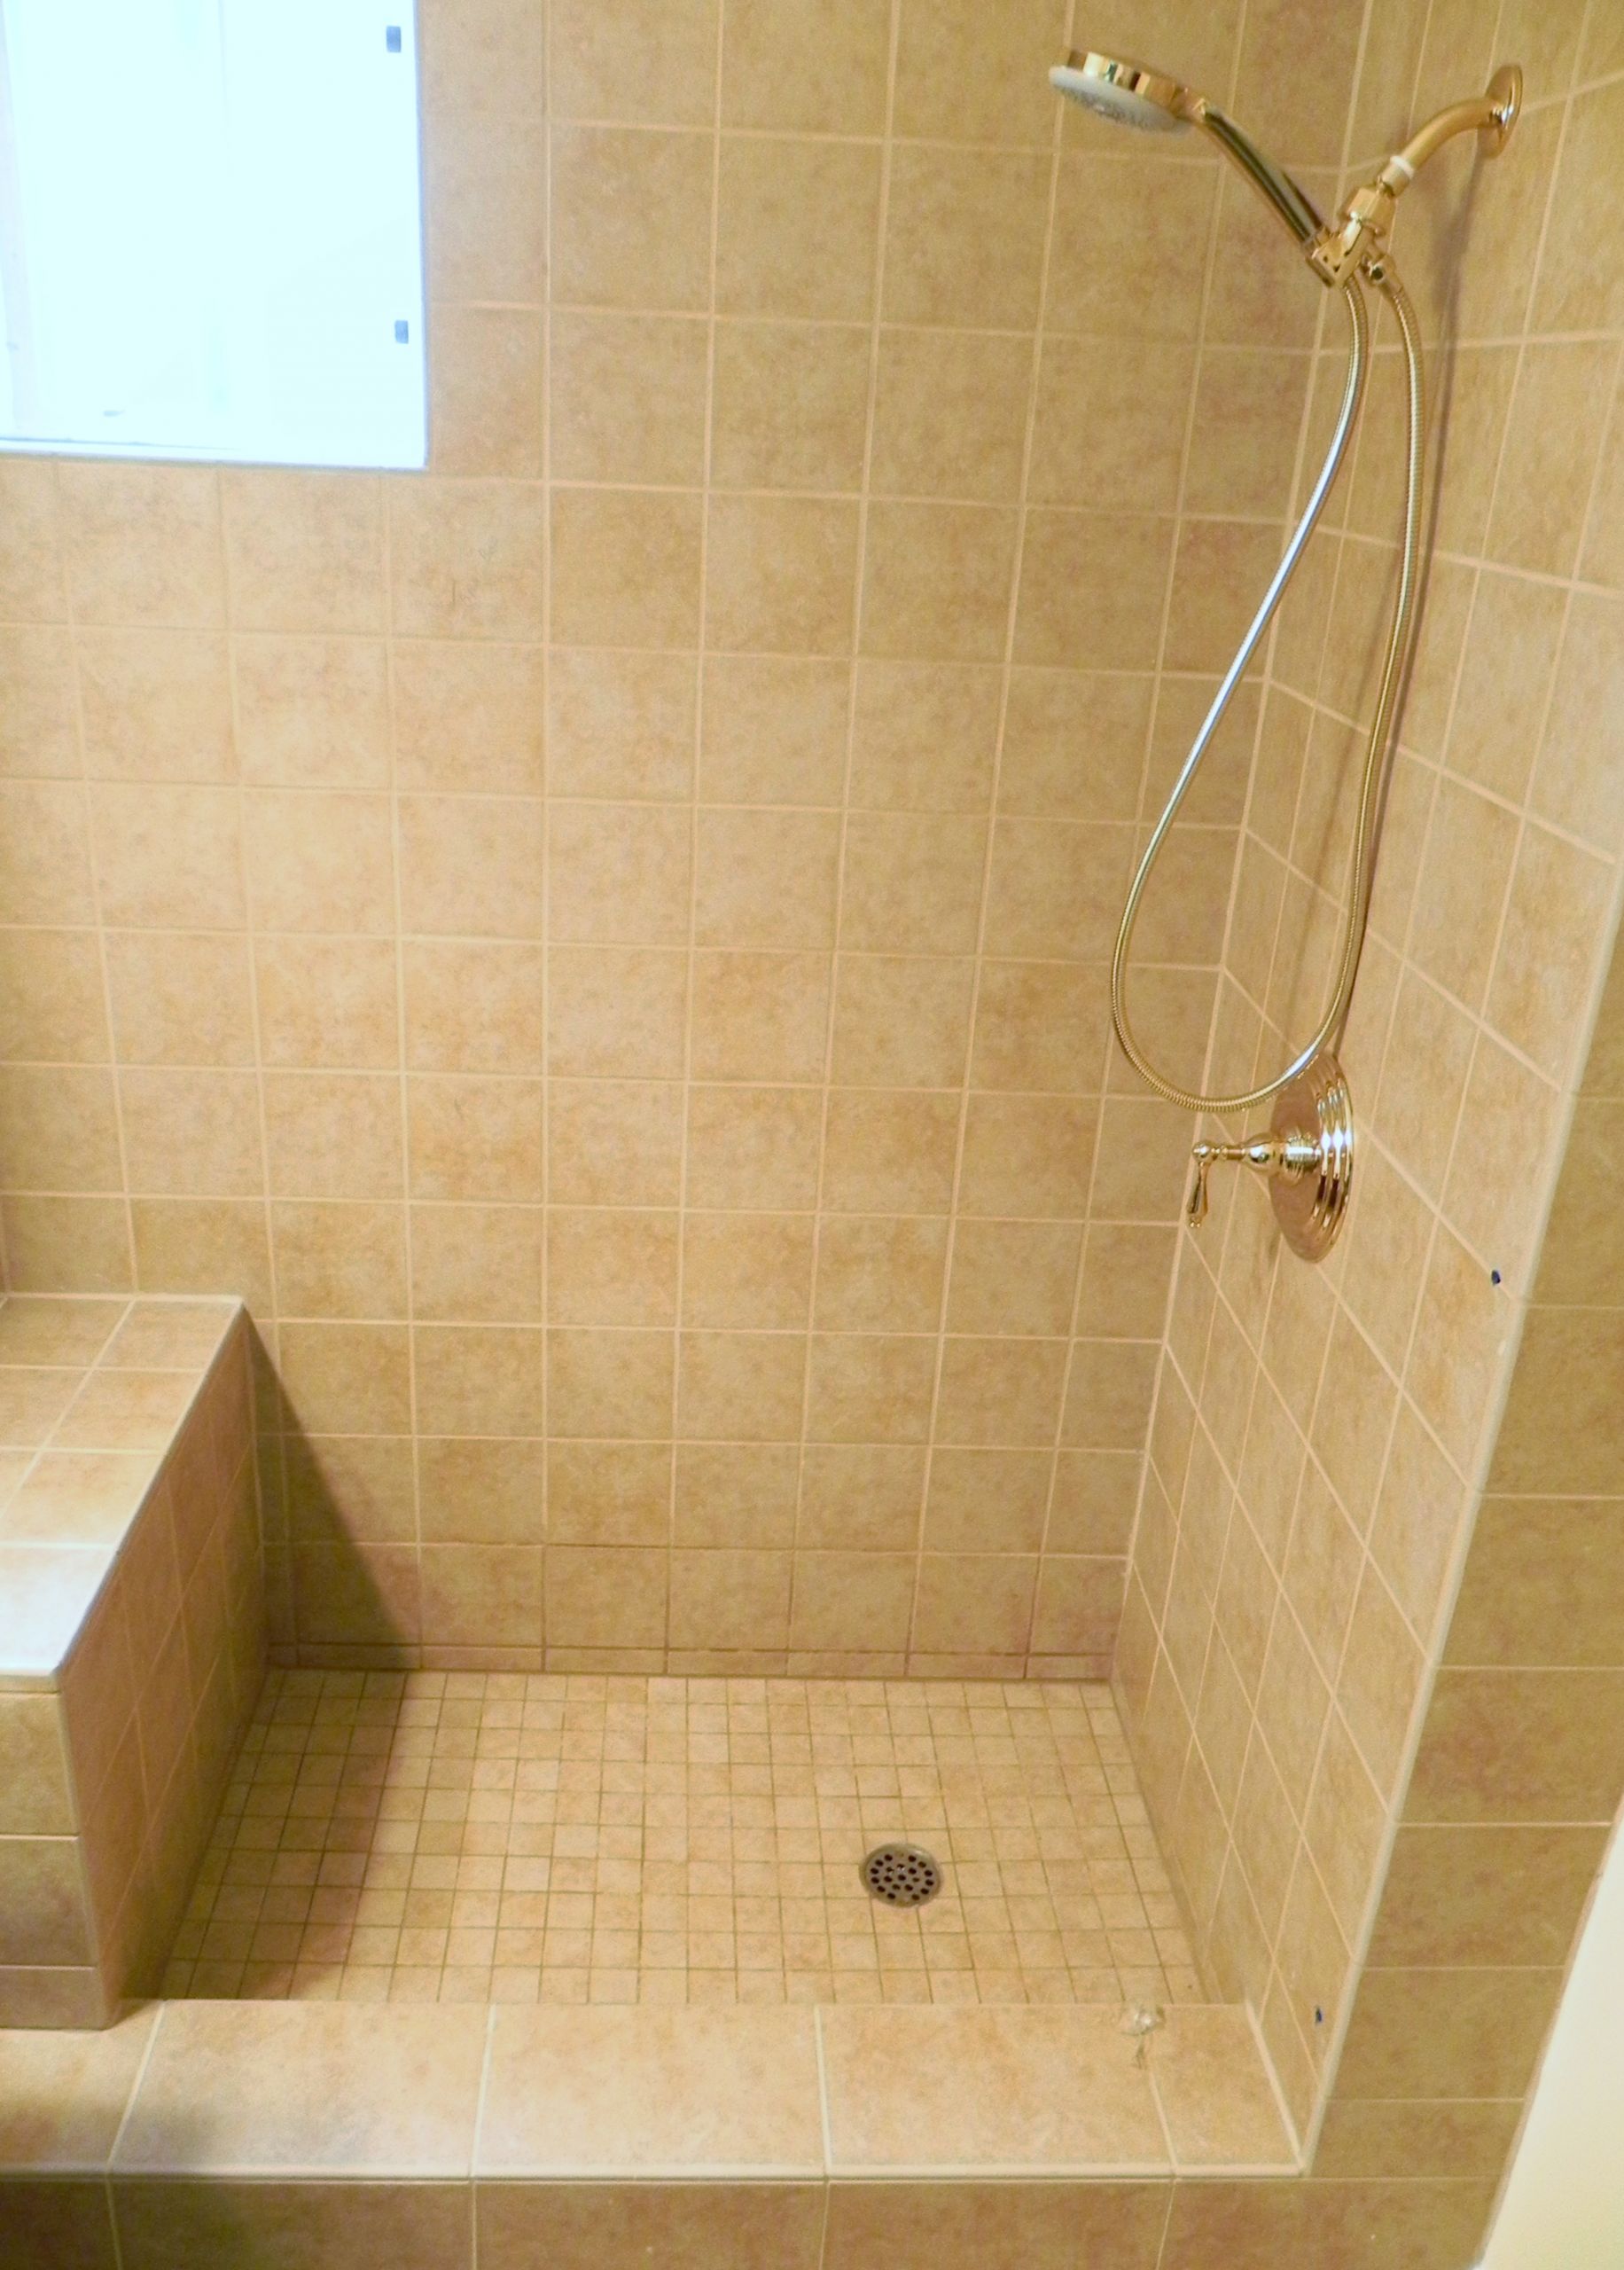 Bathroom Shower Stall Ideas
 Bathroom Remodel 3 Walk In Shower Design Ideas